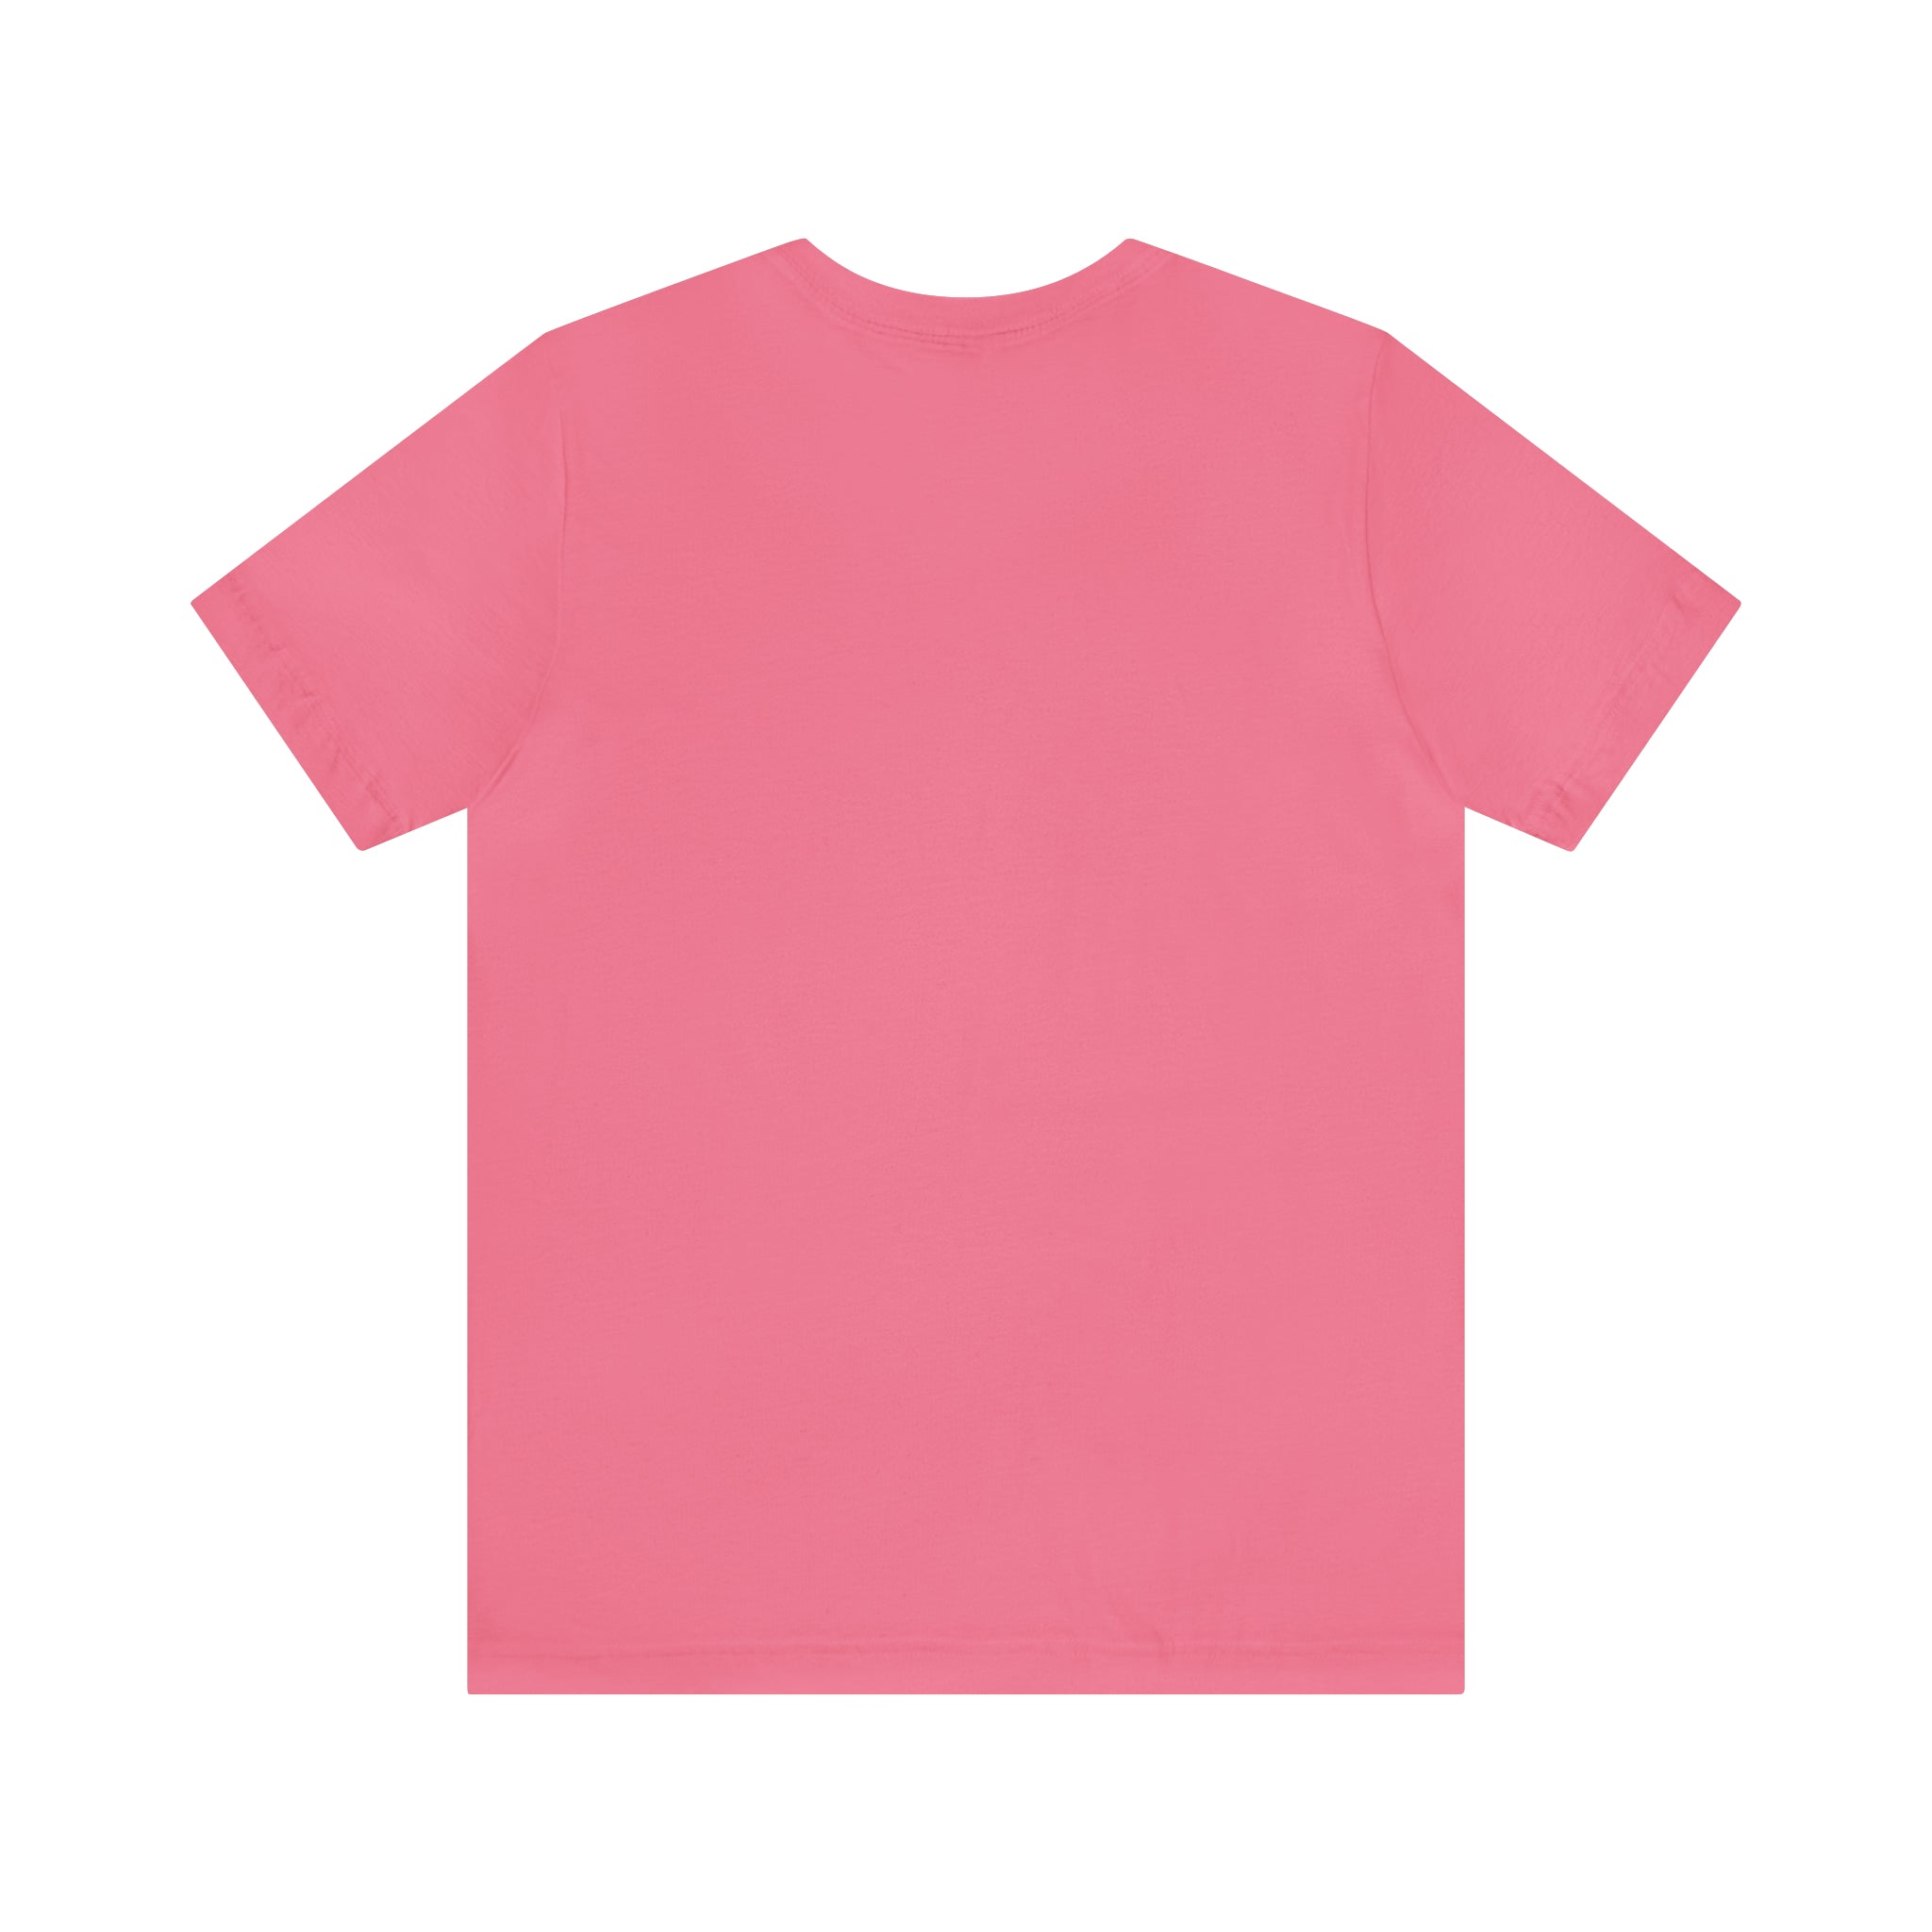 Printify T-Shirt Mama Unisex Short Sleeve Tee - 9 Colors - 6 Sizes